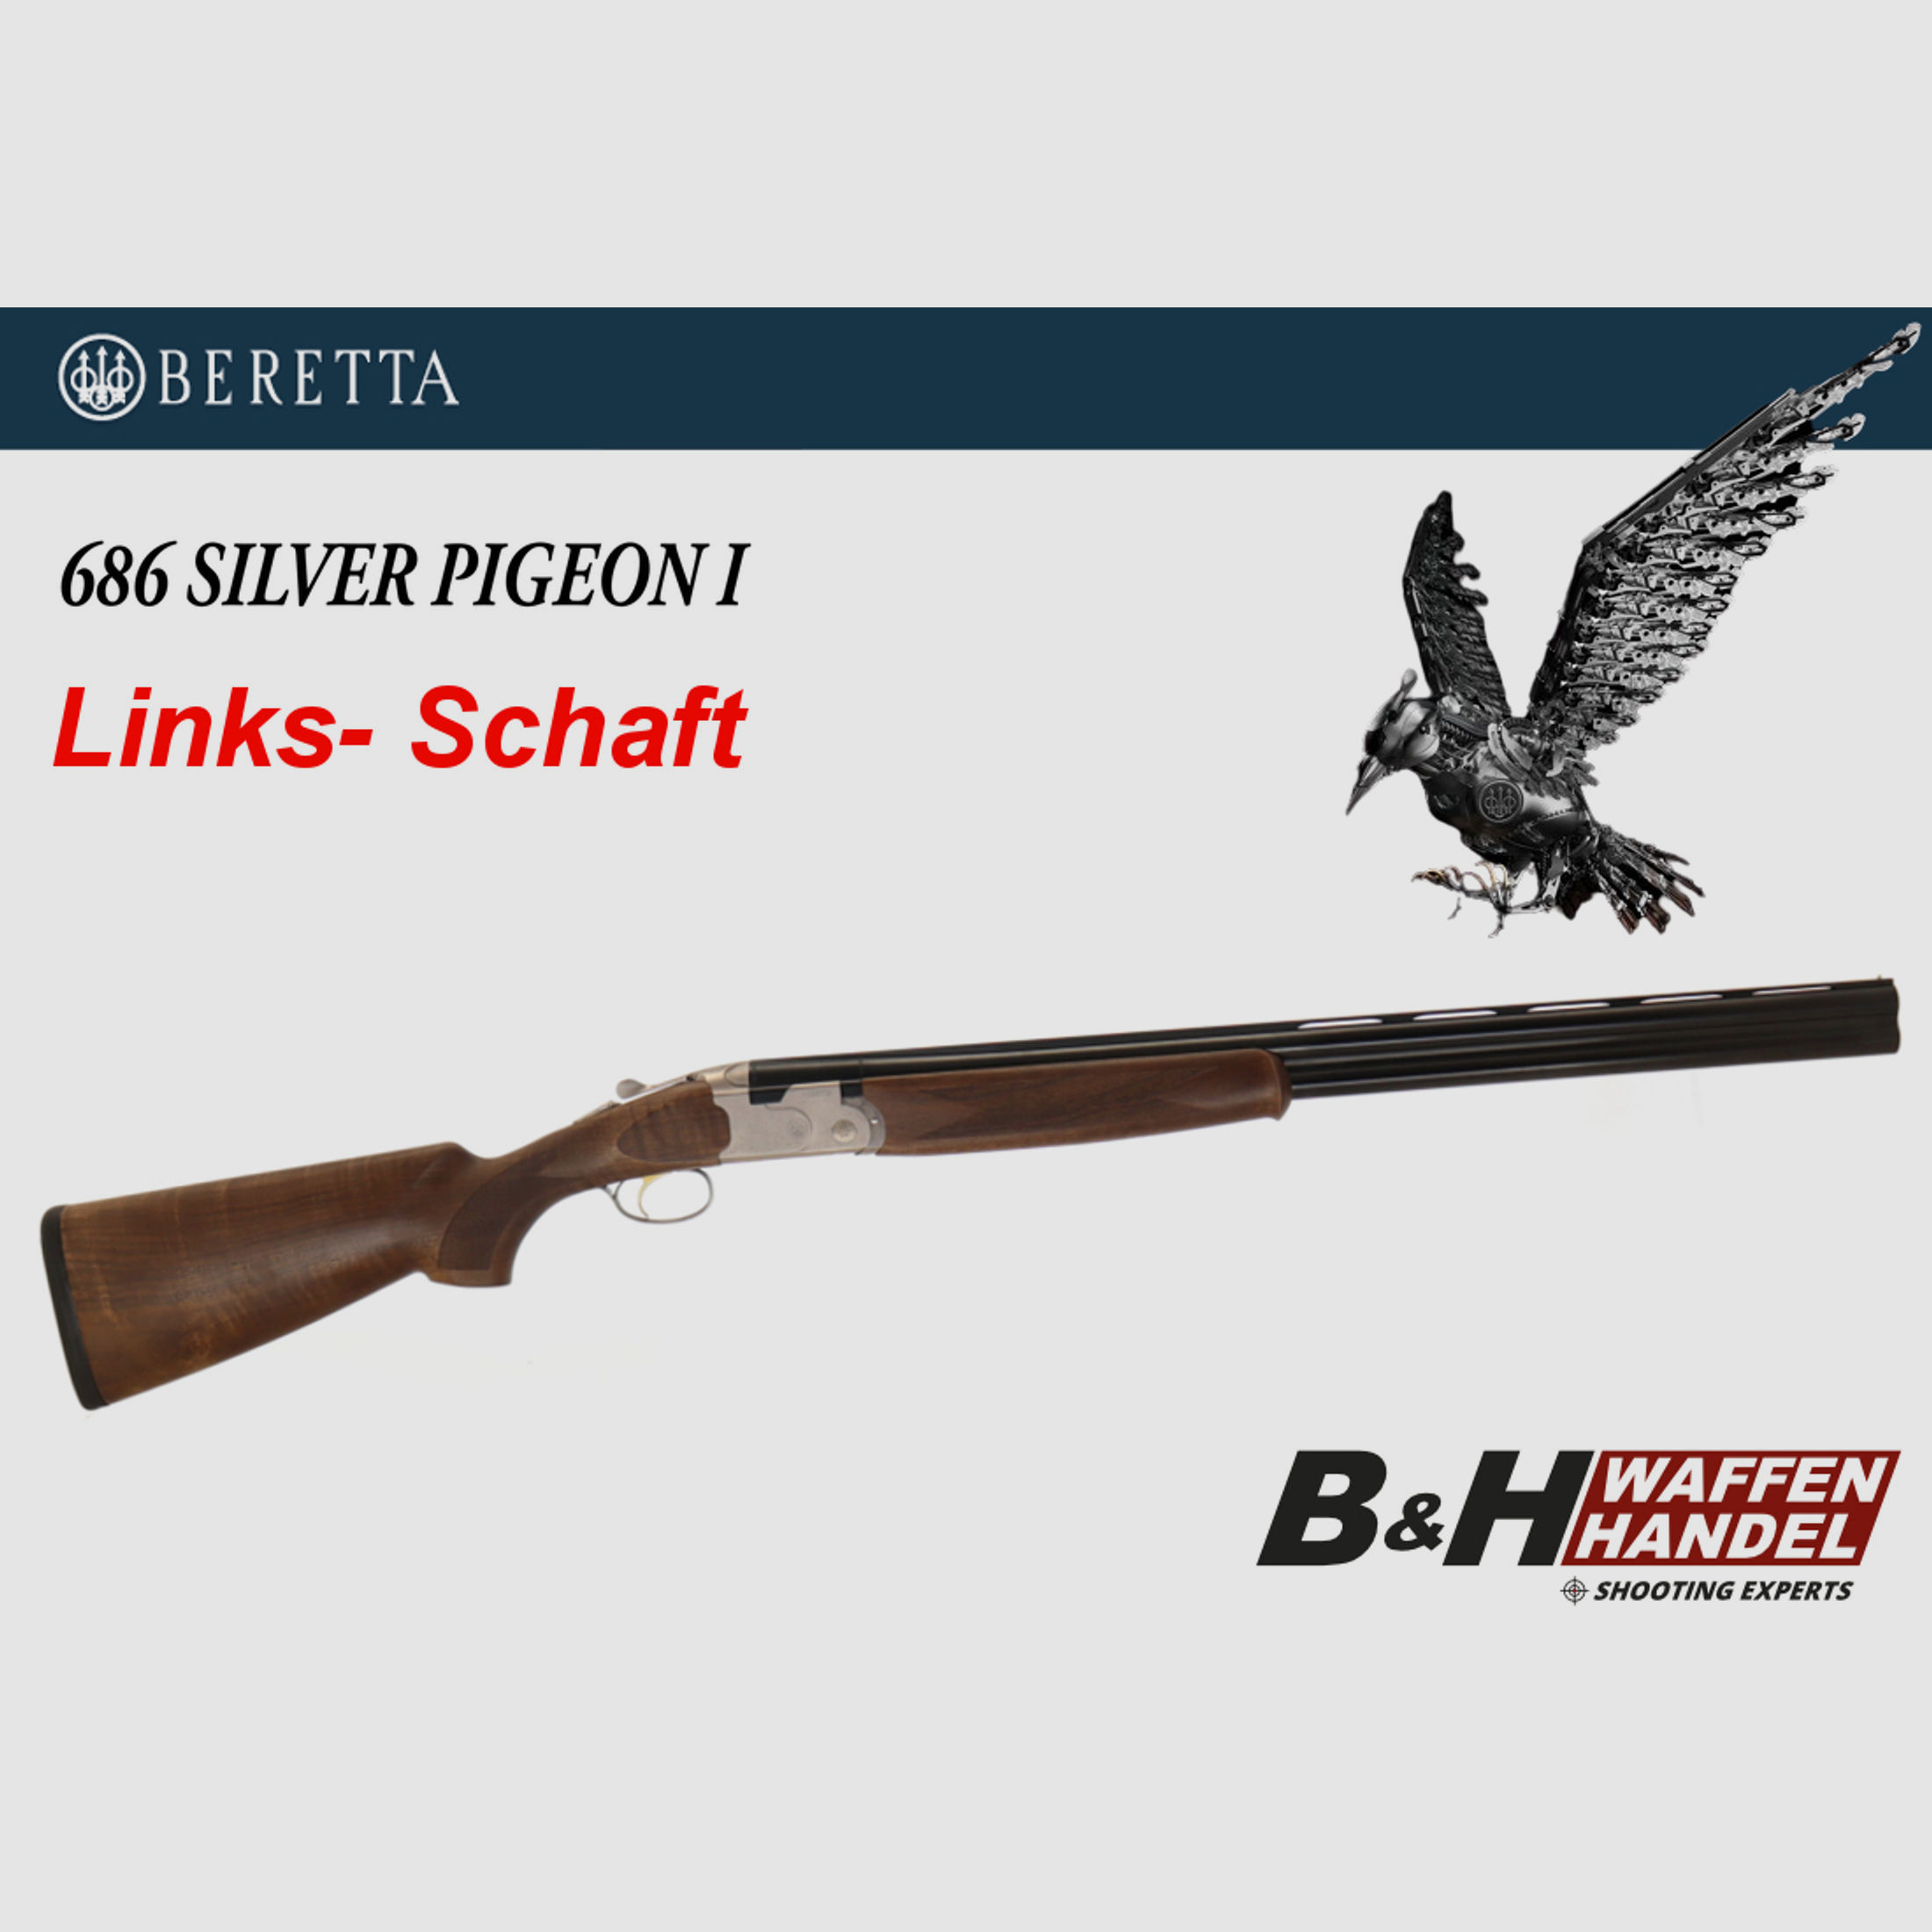 Neu: Links Bockflinte Beretta 686 Silver Pigeon 1 Jagd LL 71cm Bockflinte Bockdoppelflinte BDF mit Stahlschrotbeschuss Linksschaft